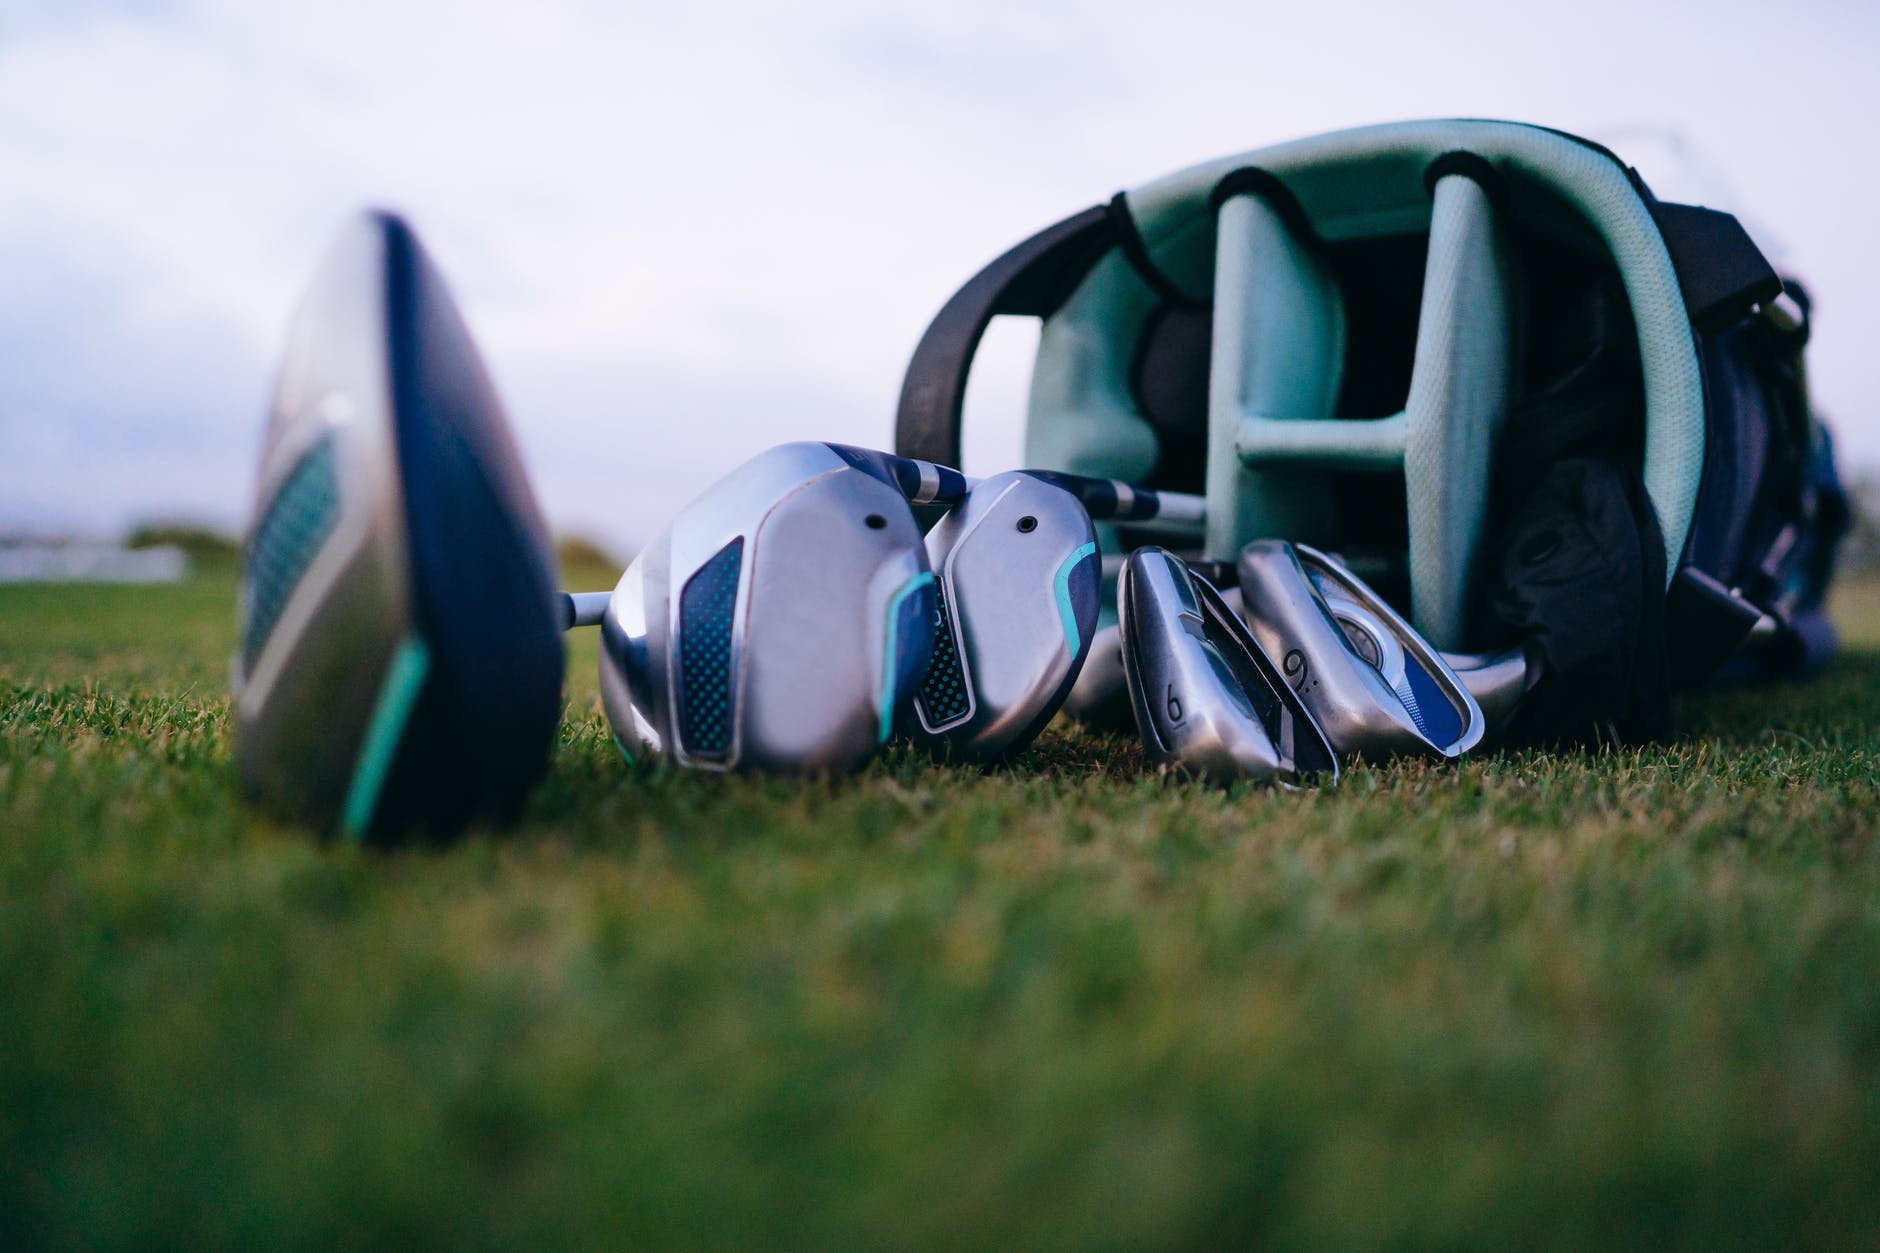 a golf clubs on the grass